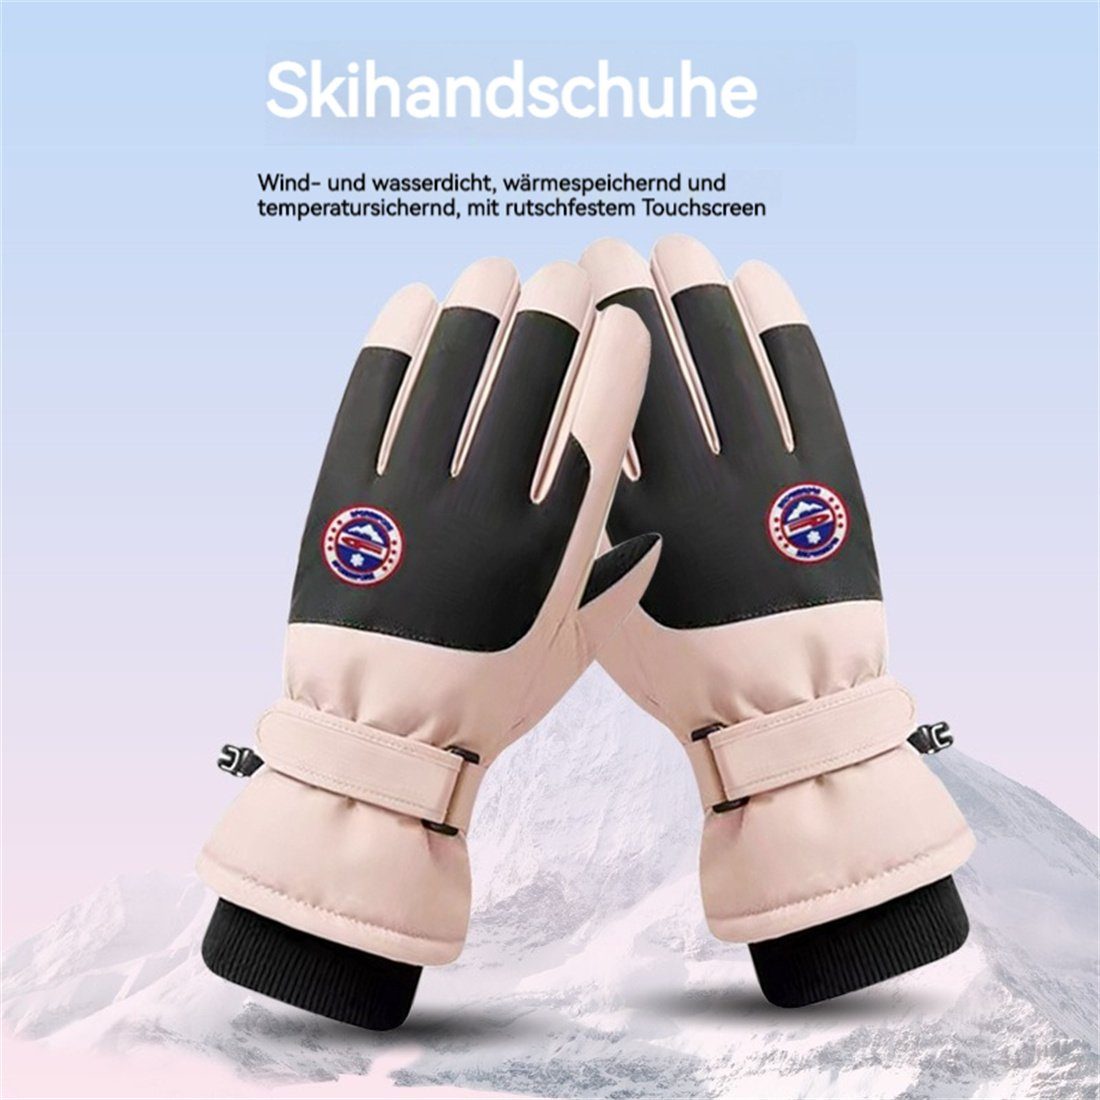 DÖRÖY Skihandschuhe Wintersport-Skihandschuhe, Reiten Handschuhe, warme Grau unisex winddichte